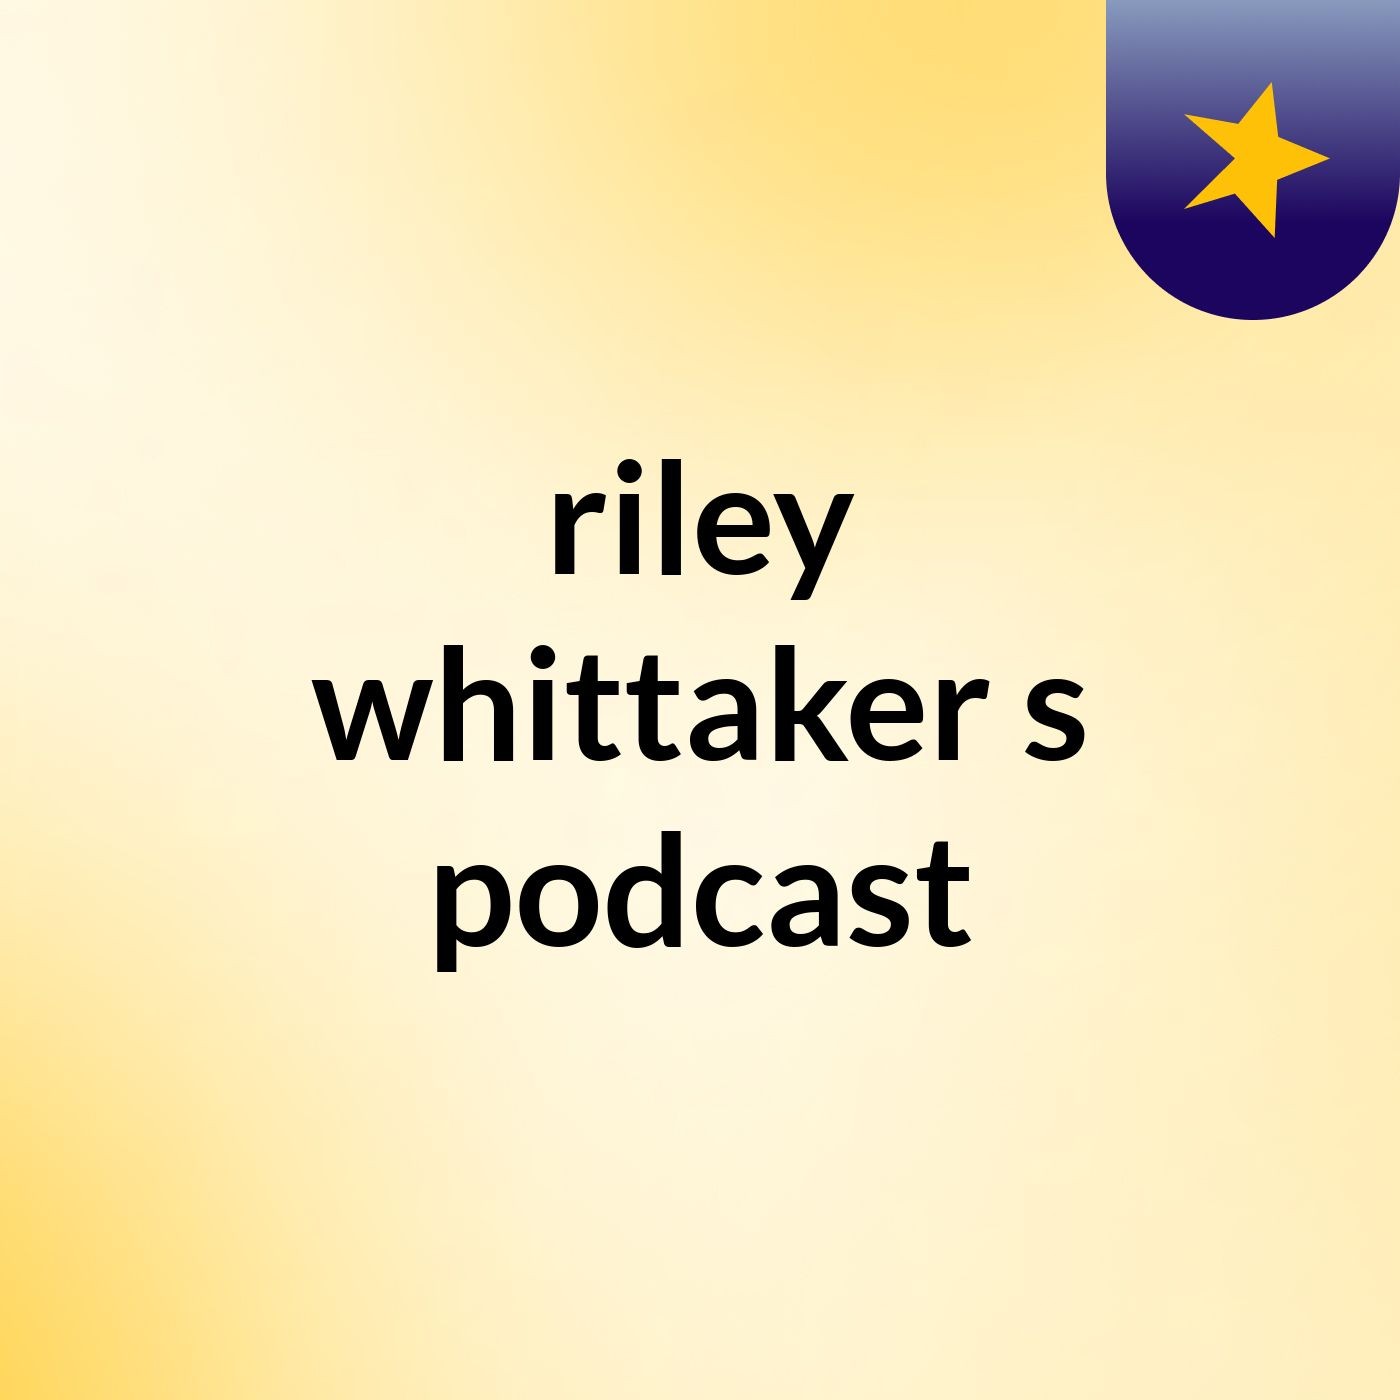 Episode 1 - riley whittaker's journal